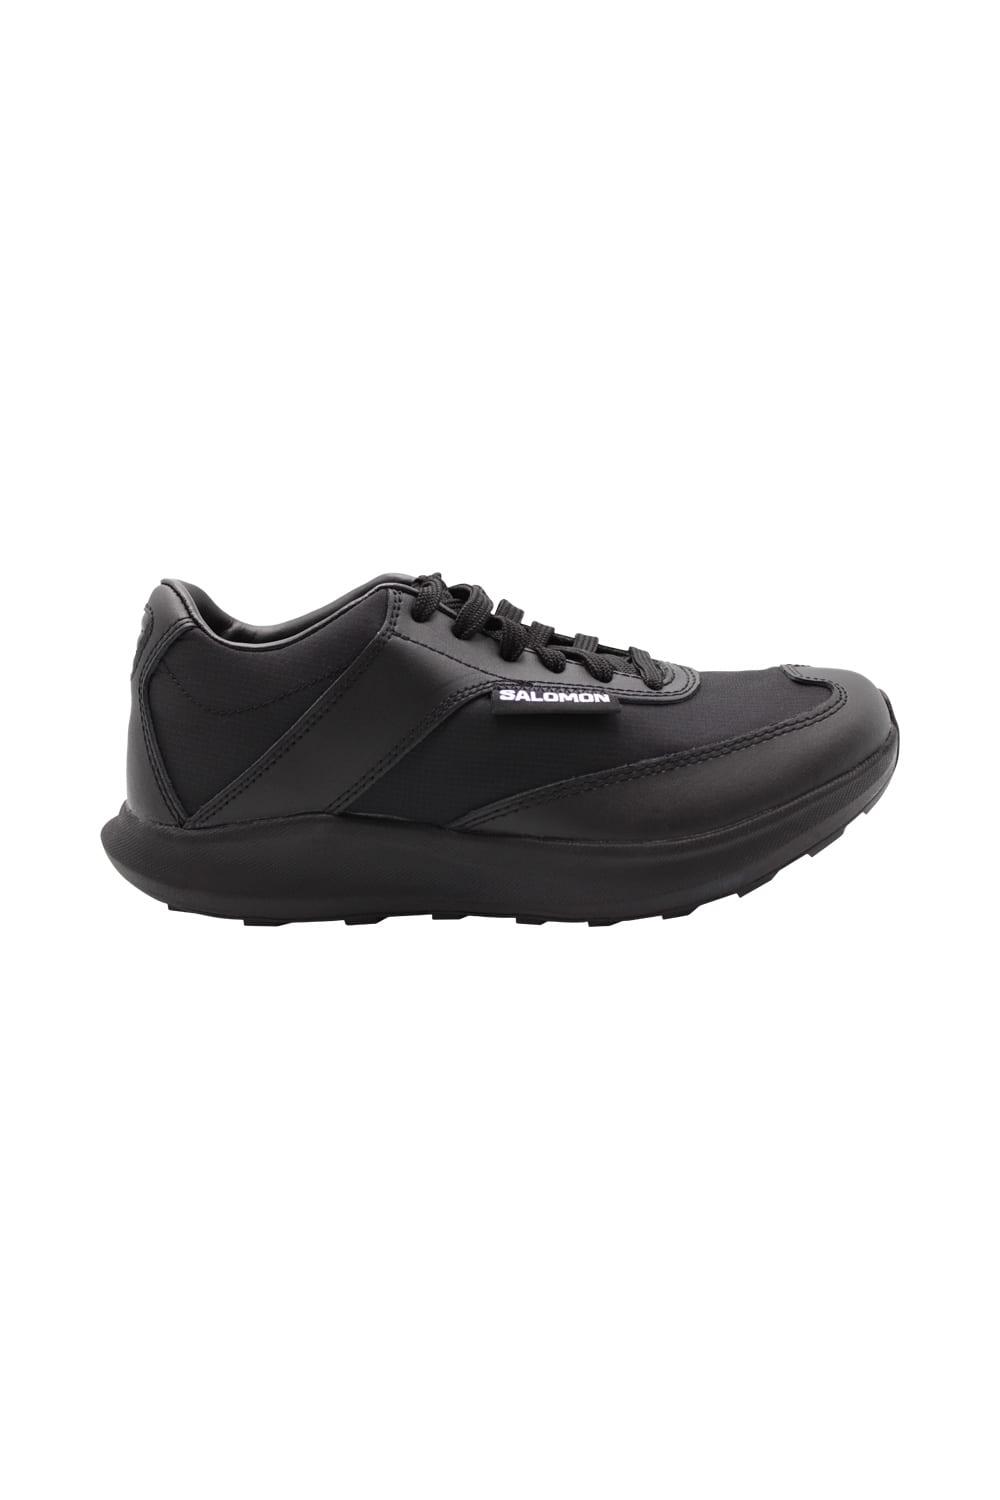 Salomon Cdg Outdoor Plein Air Shoes in Black | Lyst UK